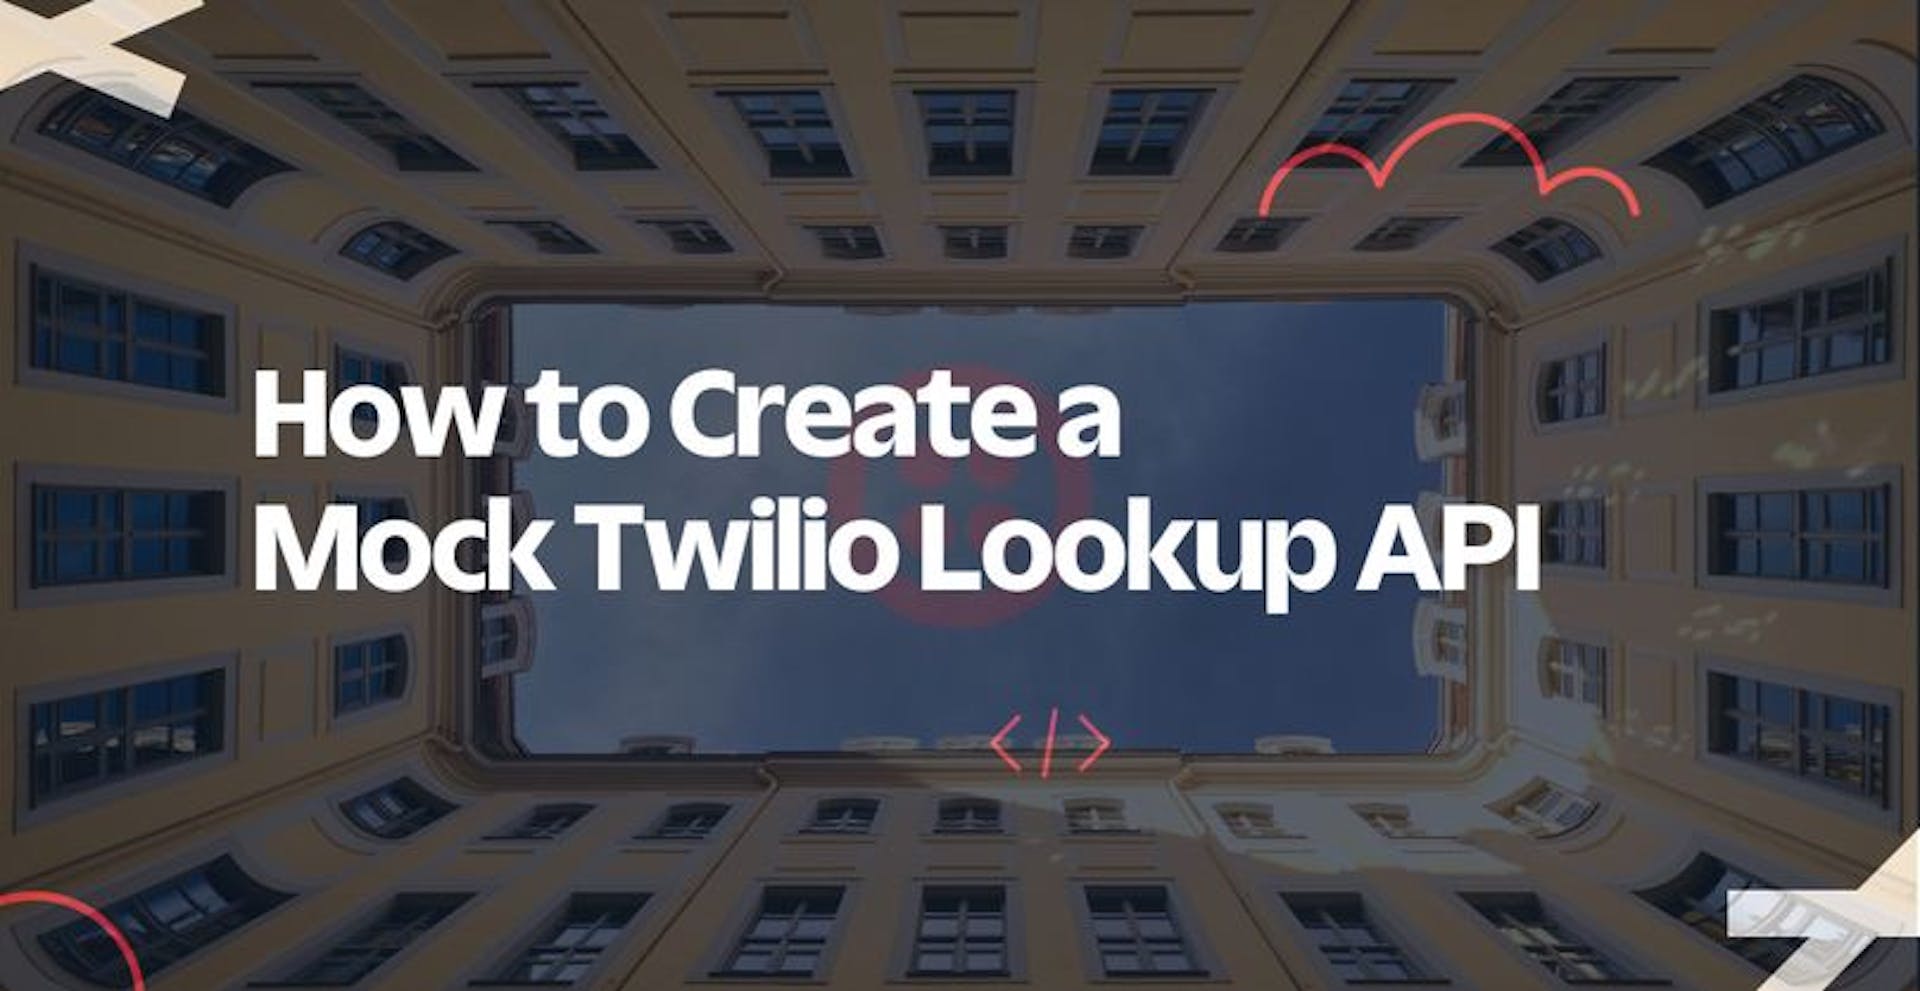 featured image - Creating a Mock Twilio Lookup API